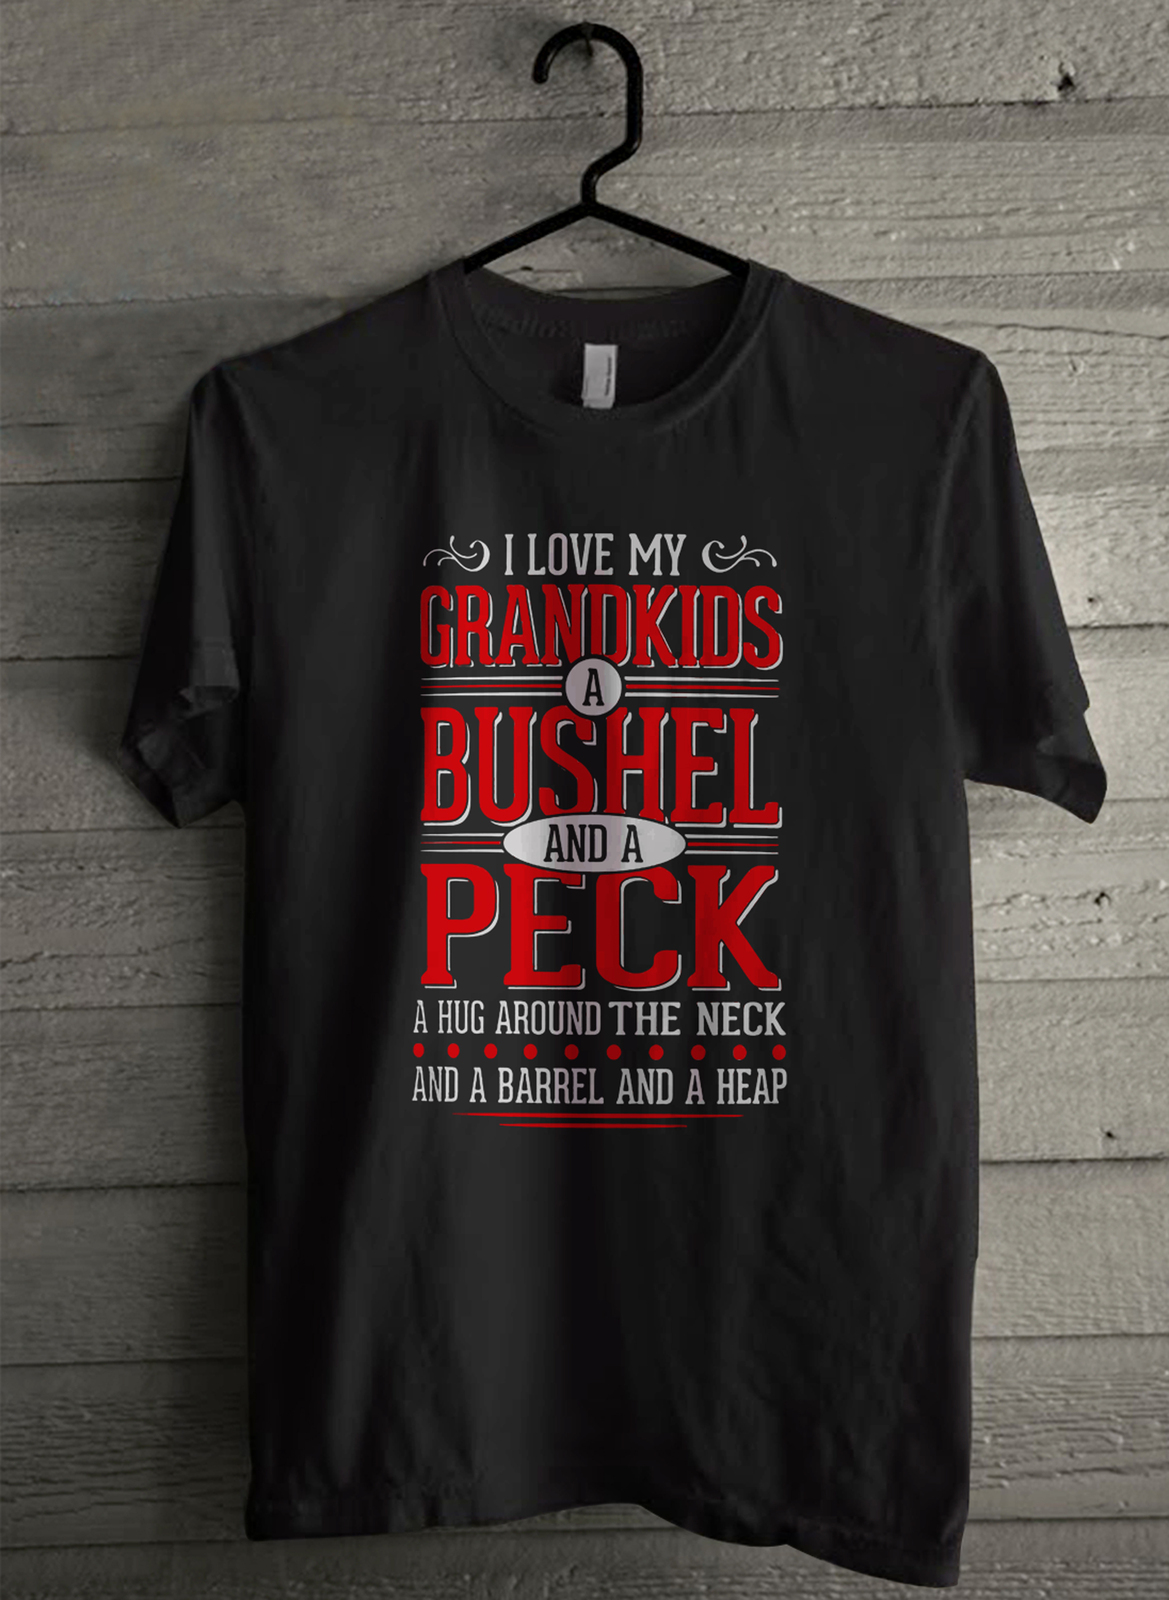 I love my grandkids a bushel and a peck Men's T-Shirt - Custom (3567) - $19.12 - $21.82